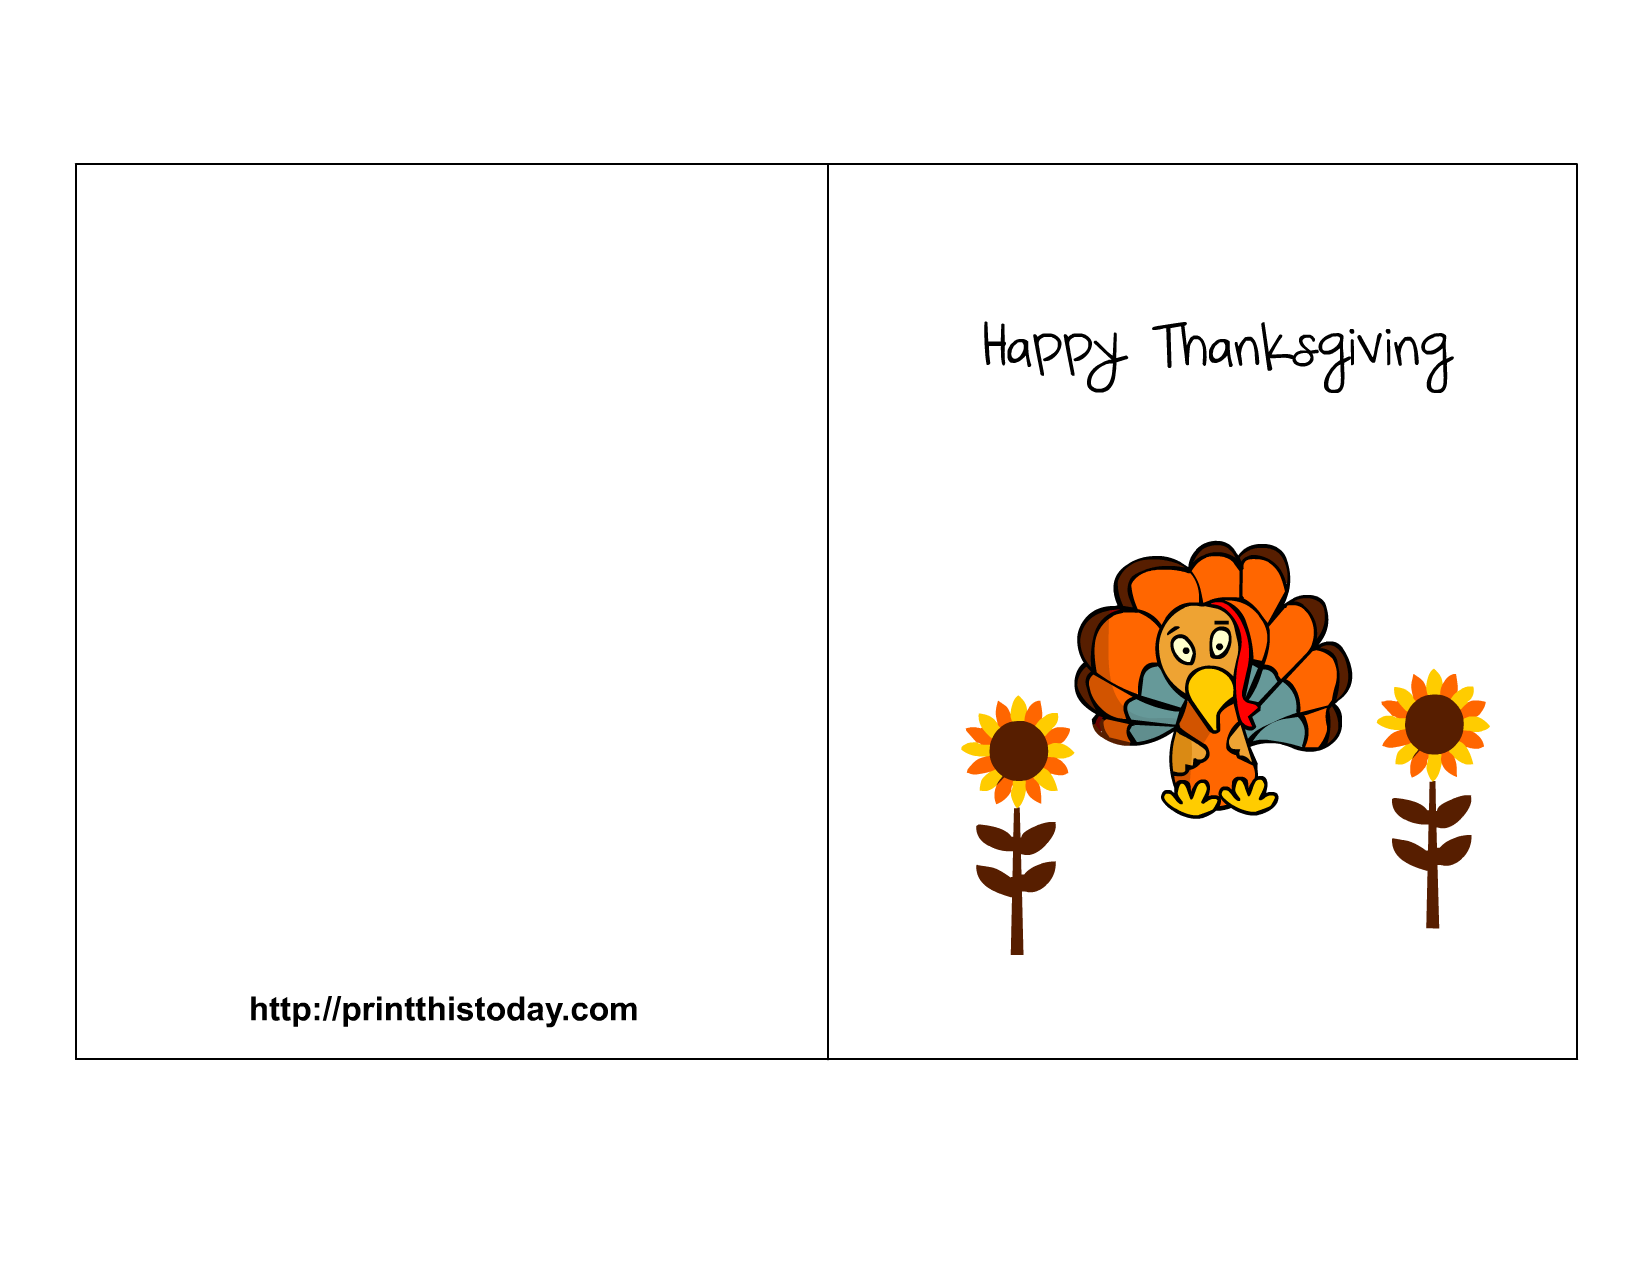 Free Printable Thanksgiving Cards